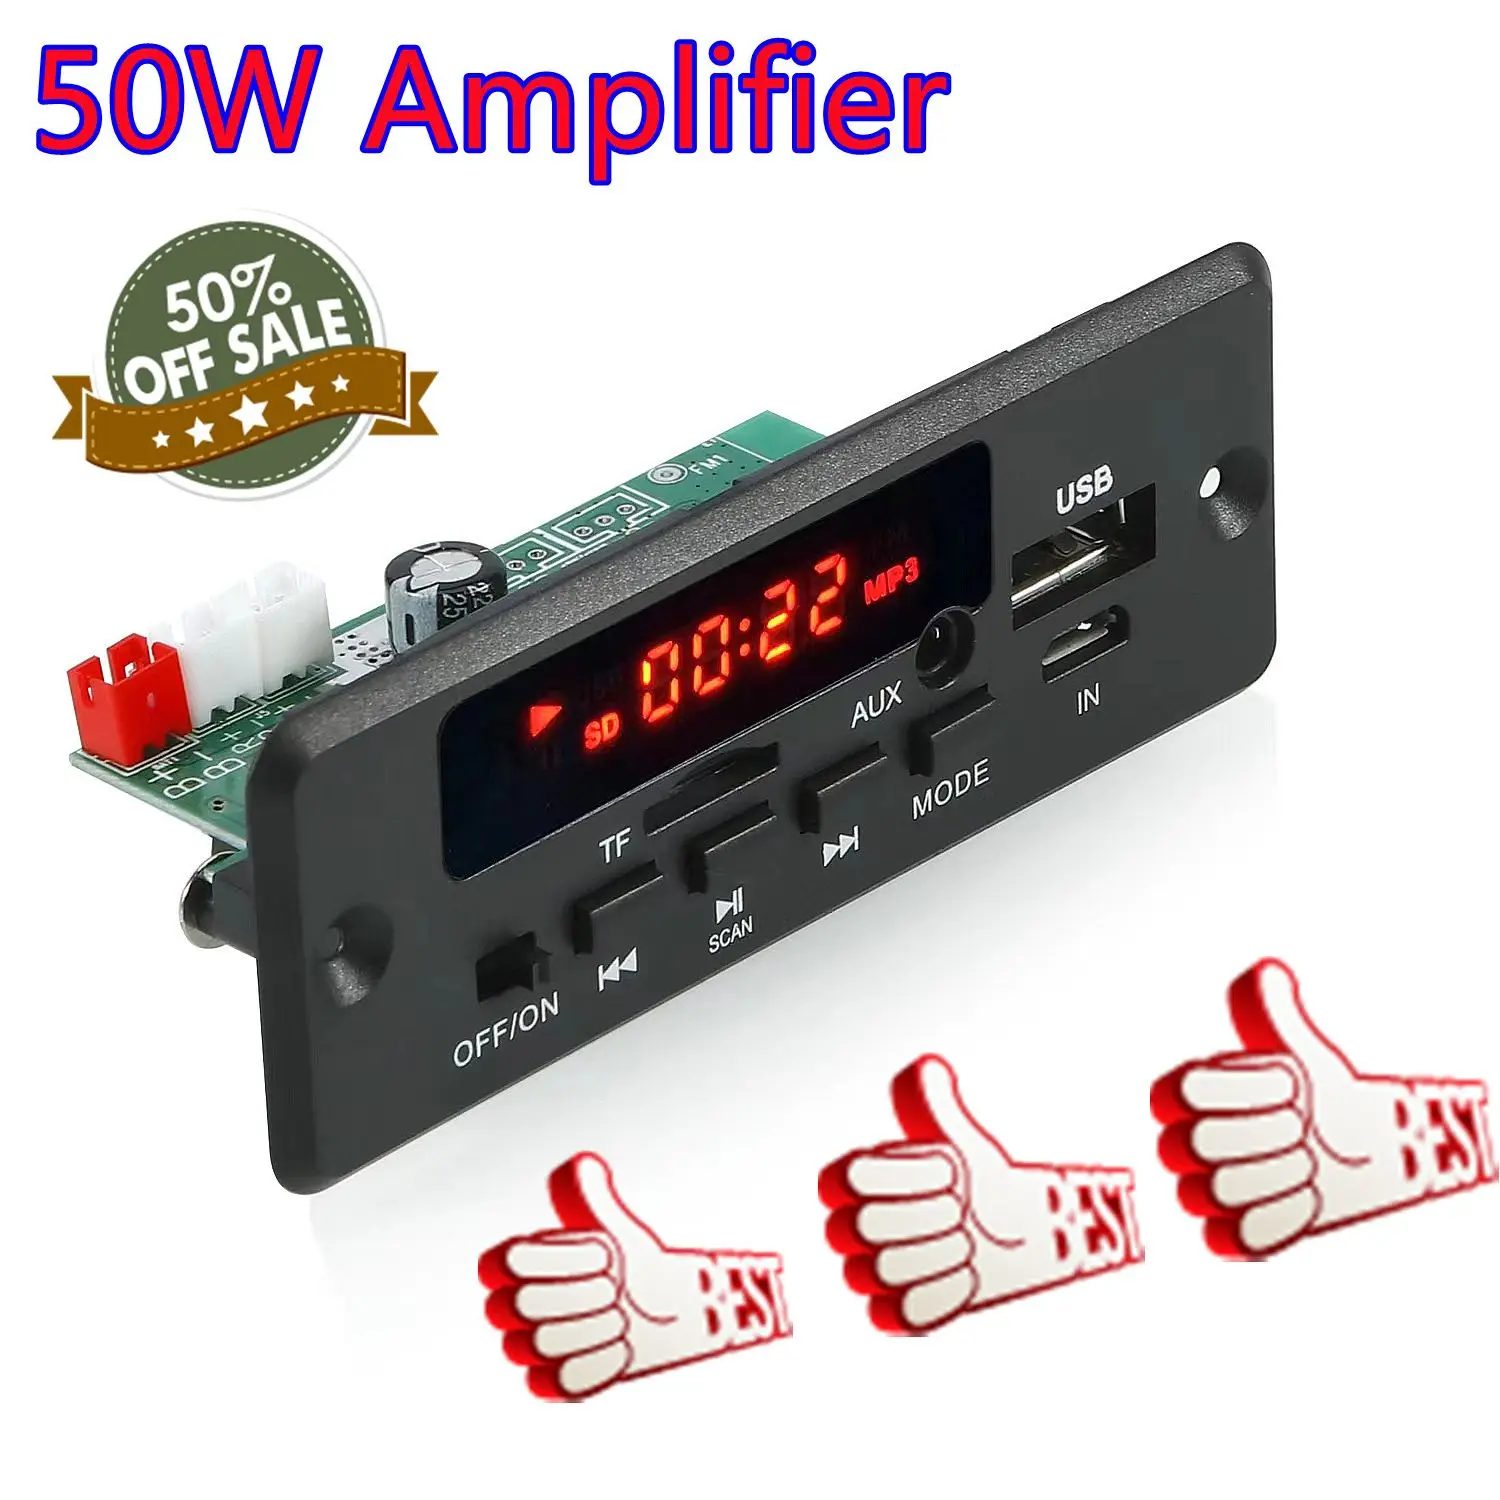 2*25W Amplifier Bluetooth 5.0 MP3 Player Decoder Board 12V Car FM Radio Module Support TF USB AUX Handsfree Call Record